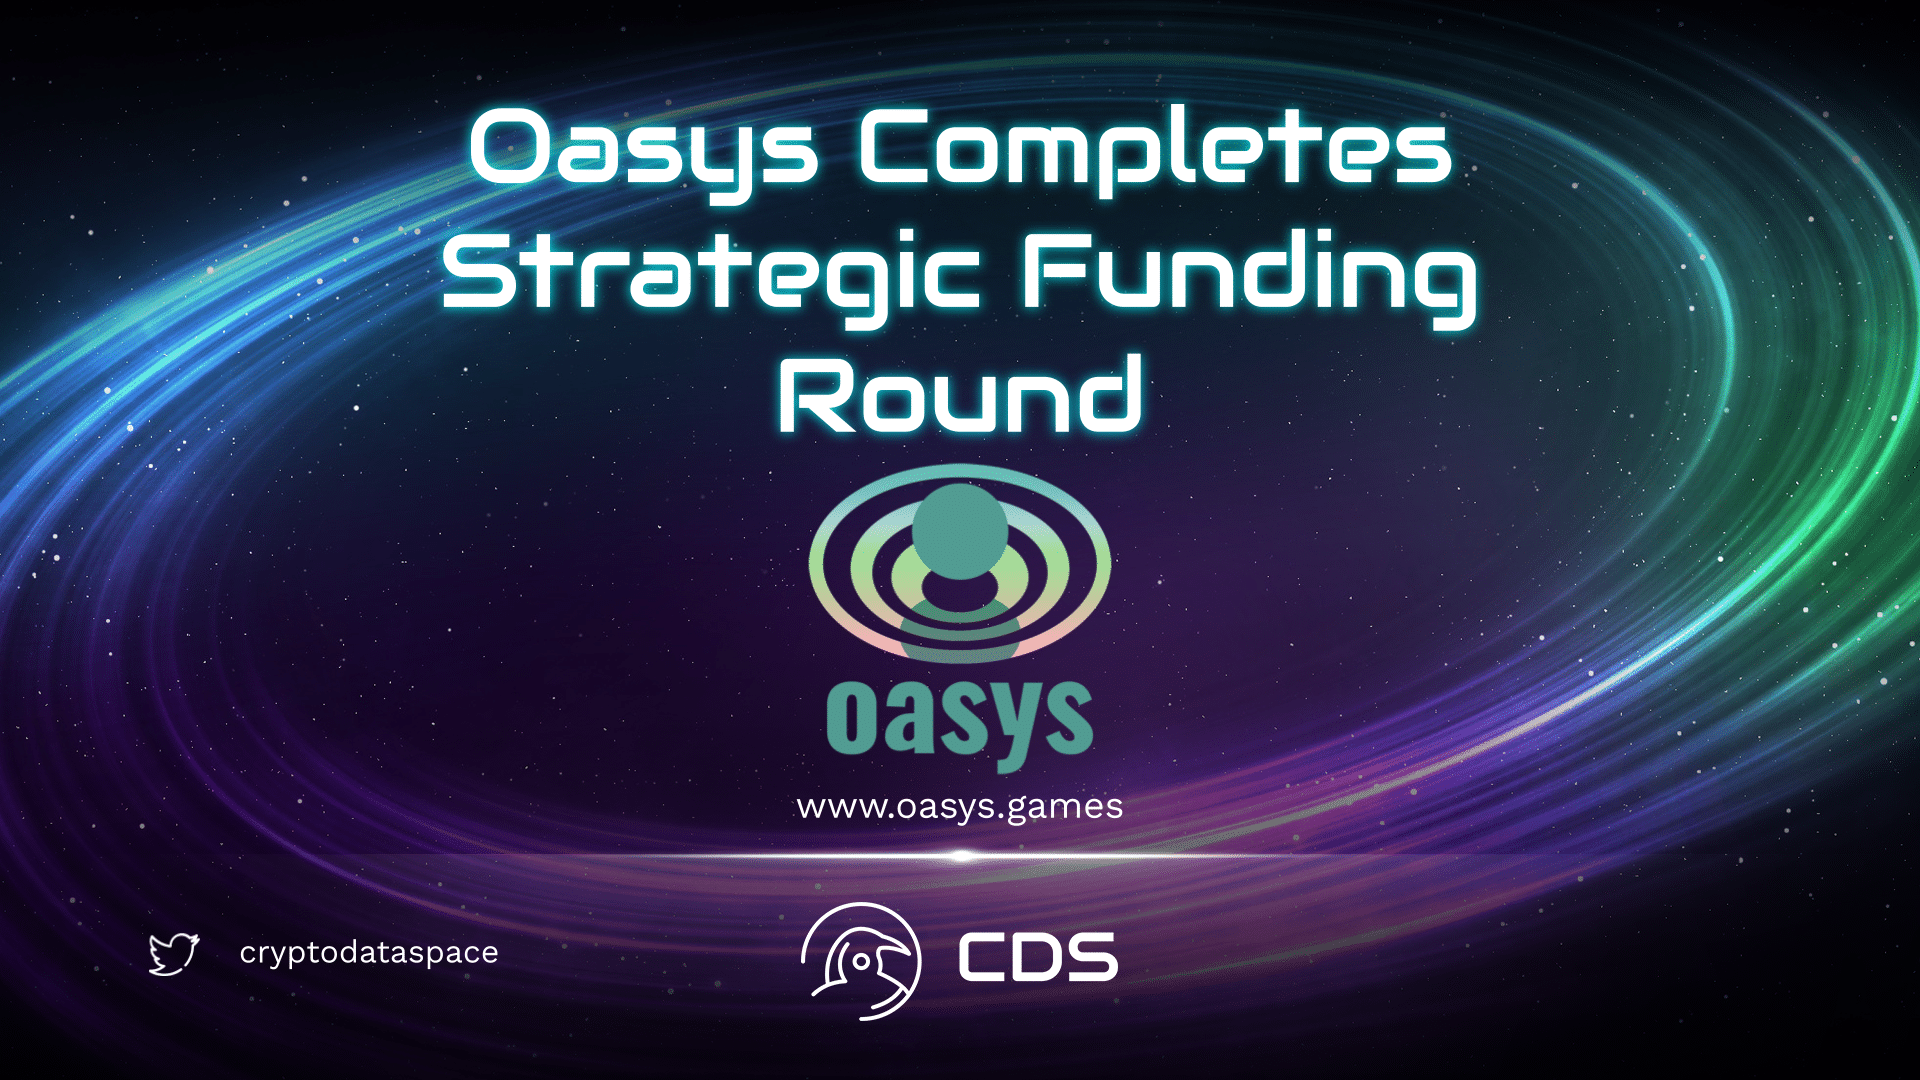 Oasys Completes Strategic Funding Round